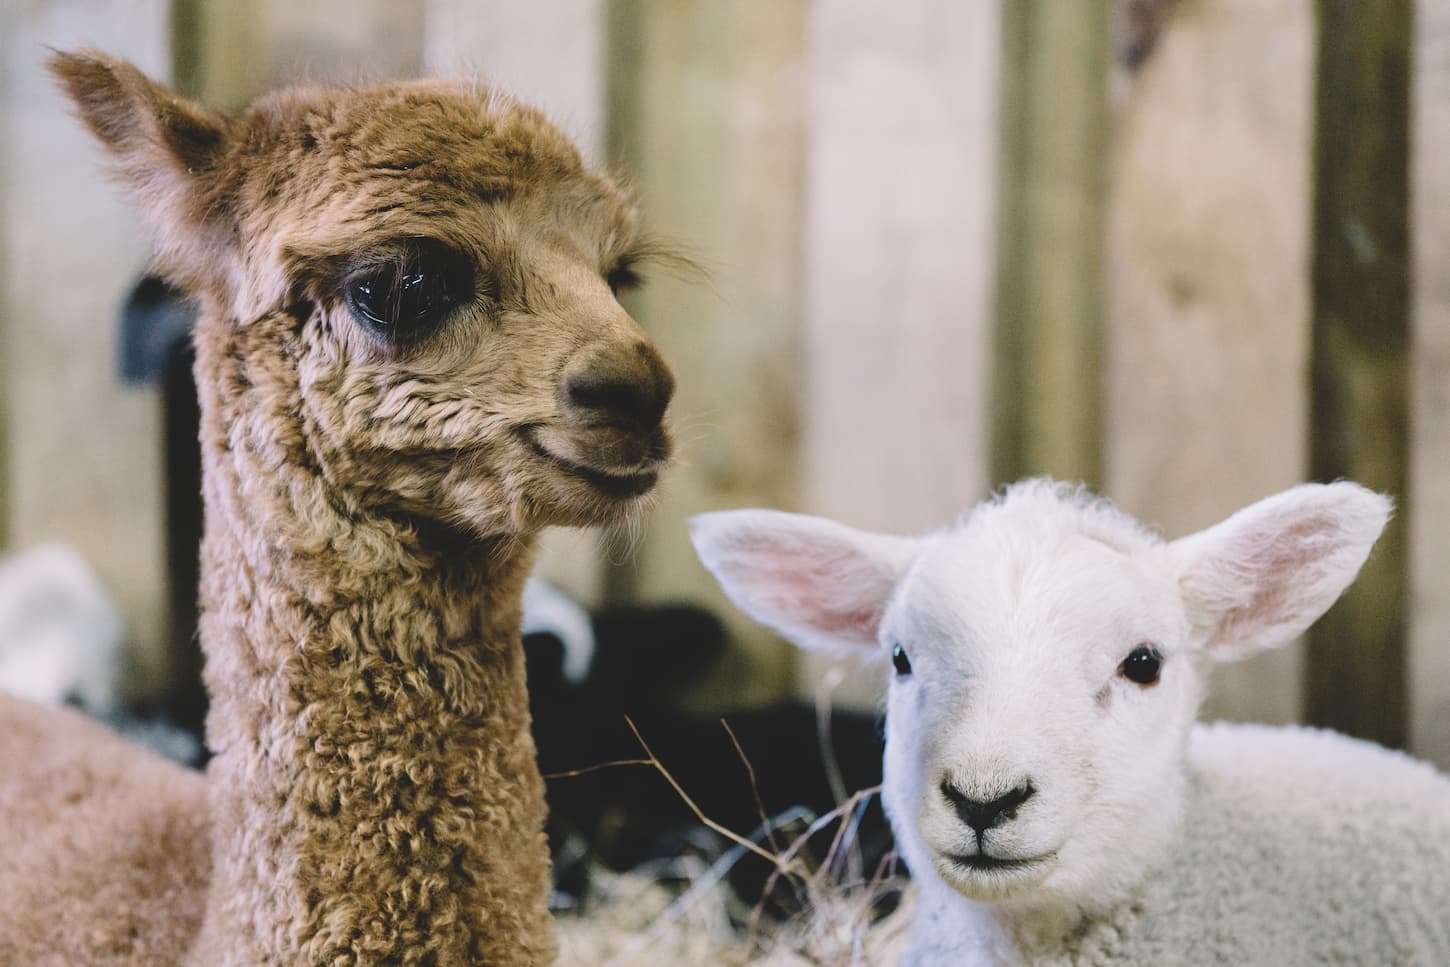 An image of an alpaca and a sheep on a farm.